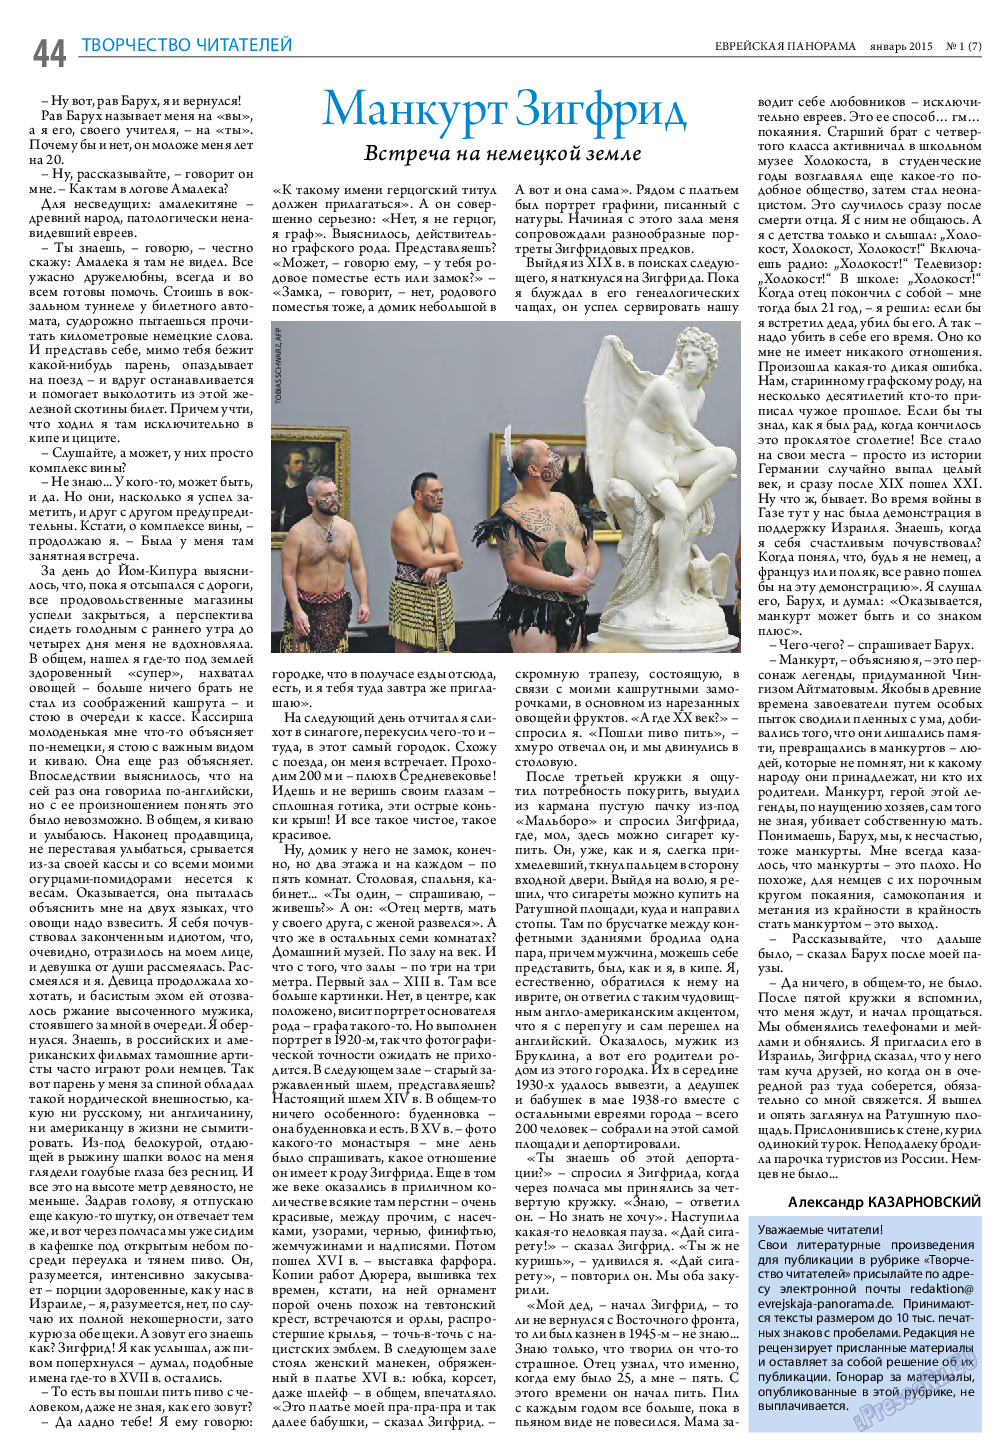 Еврейская панорама, газета. 2015 №1 стр.44